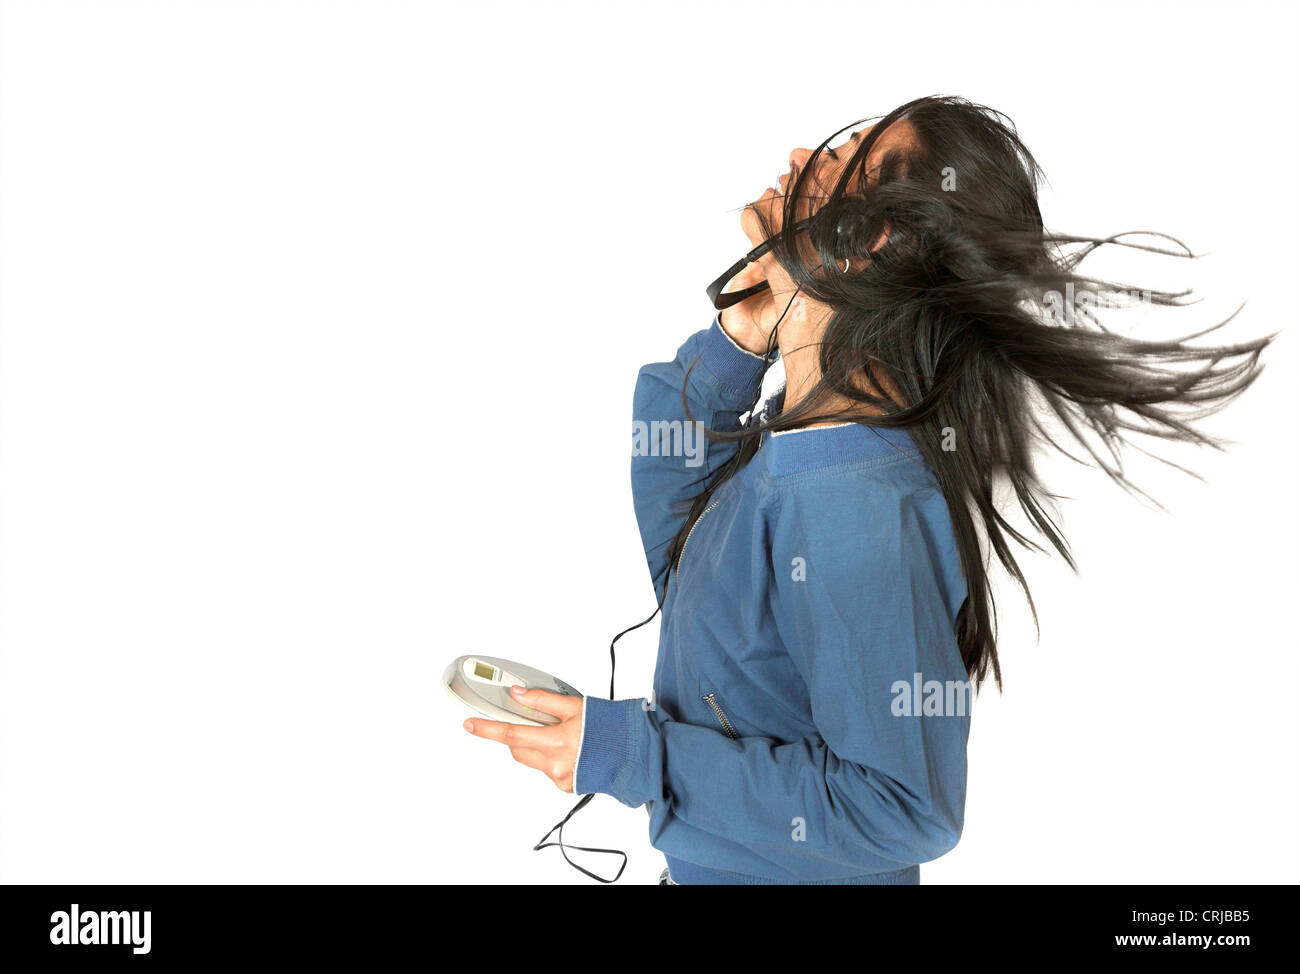 girl listening to music Stock Photo